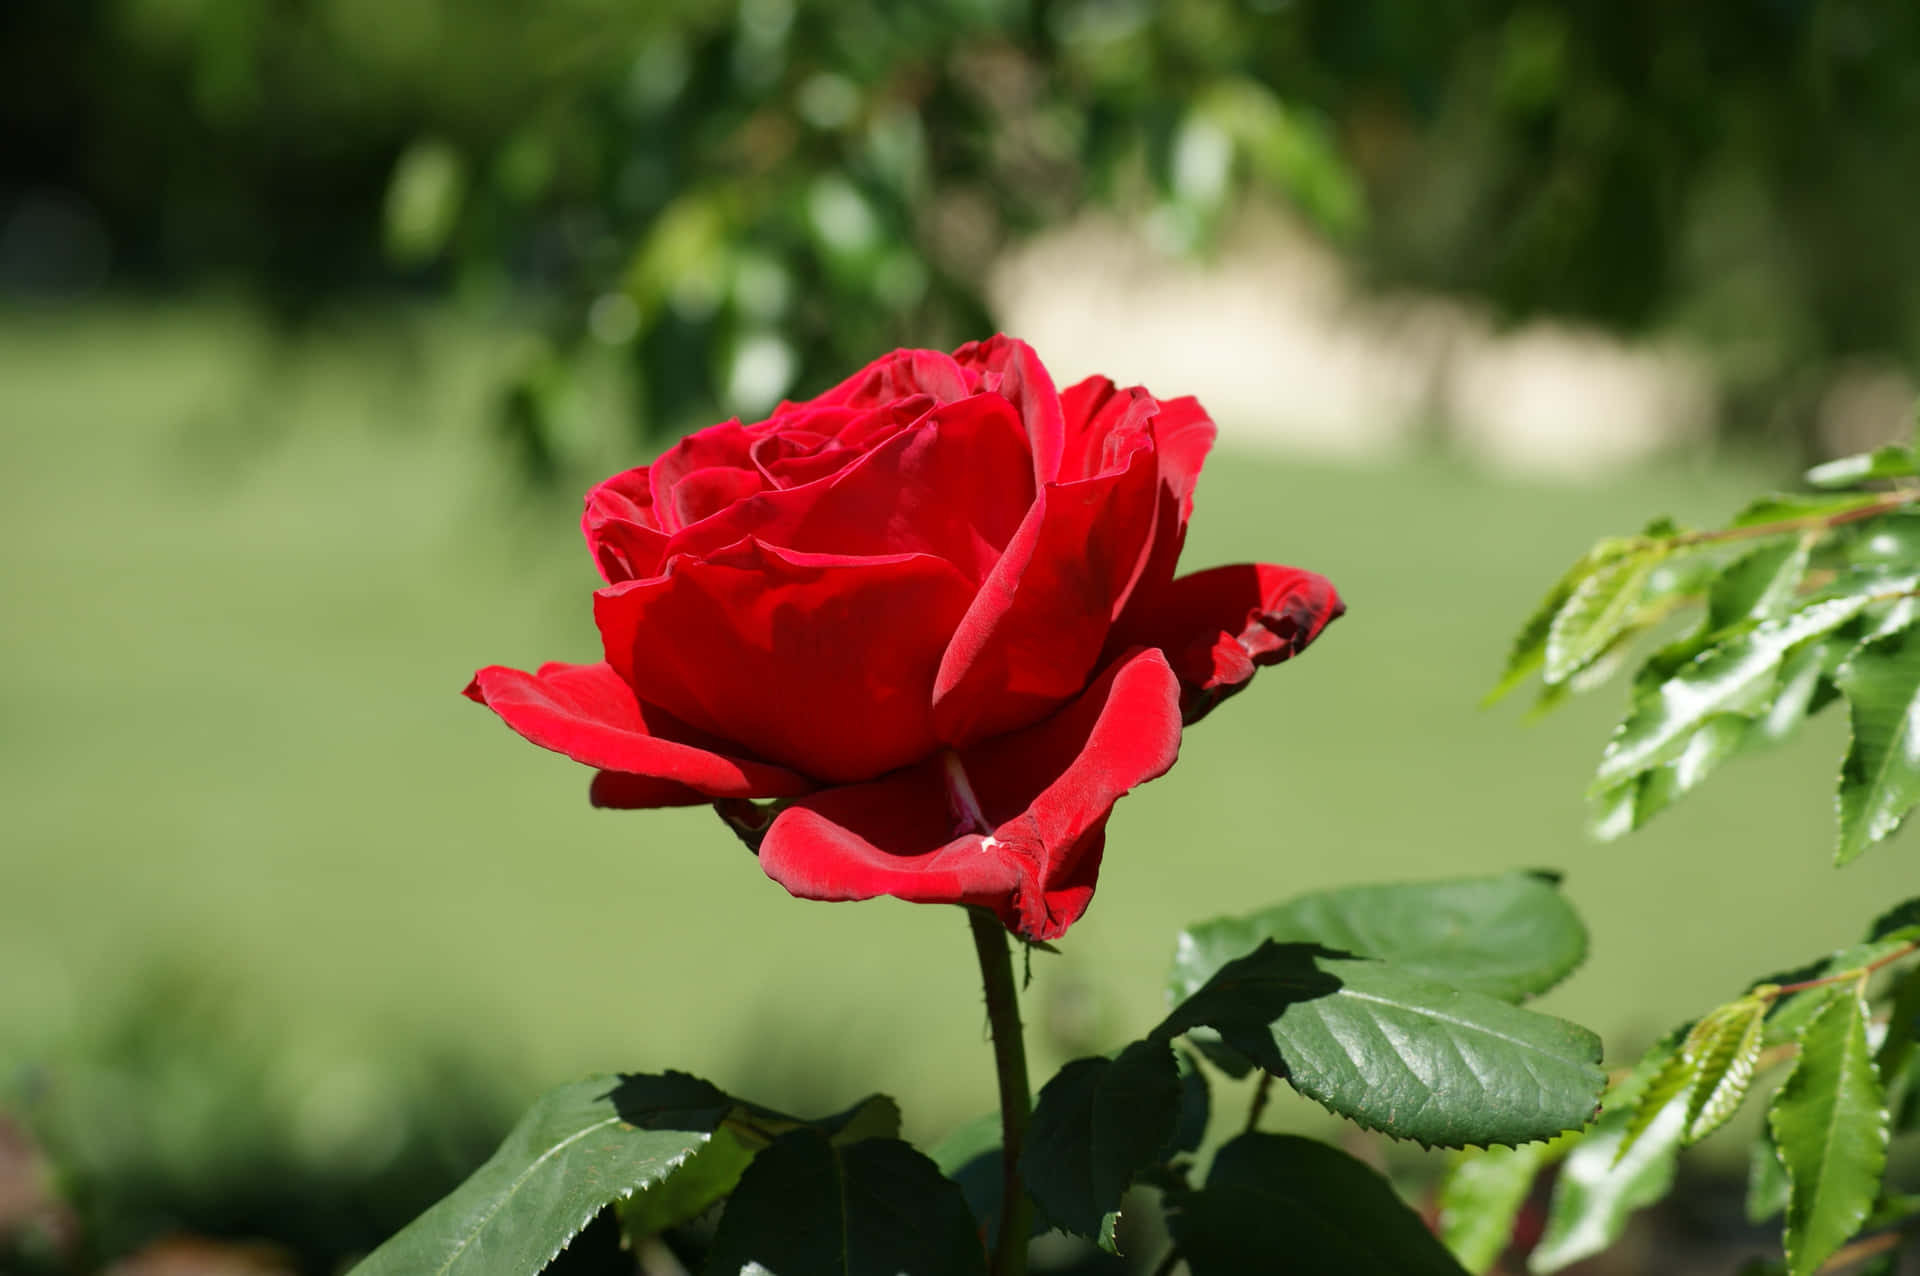 A Uniquely Beautiful Rose